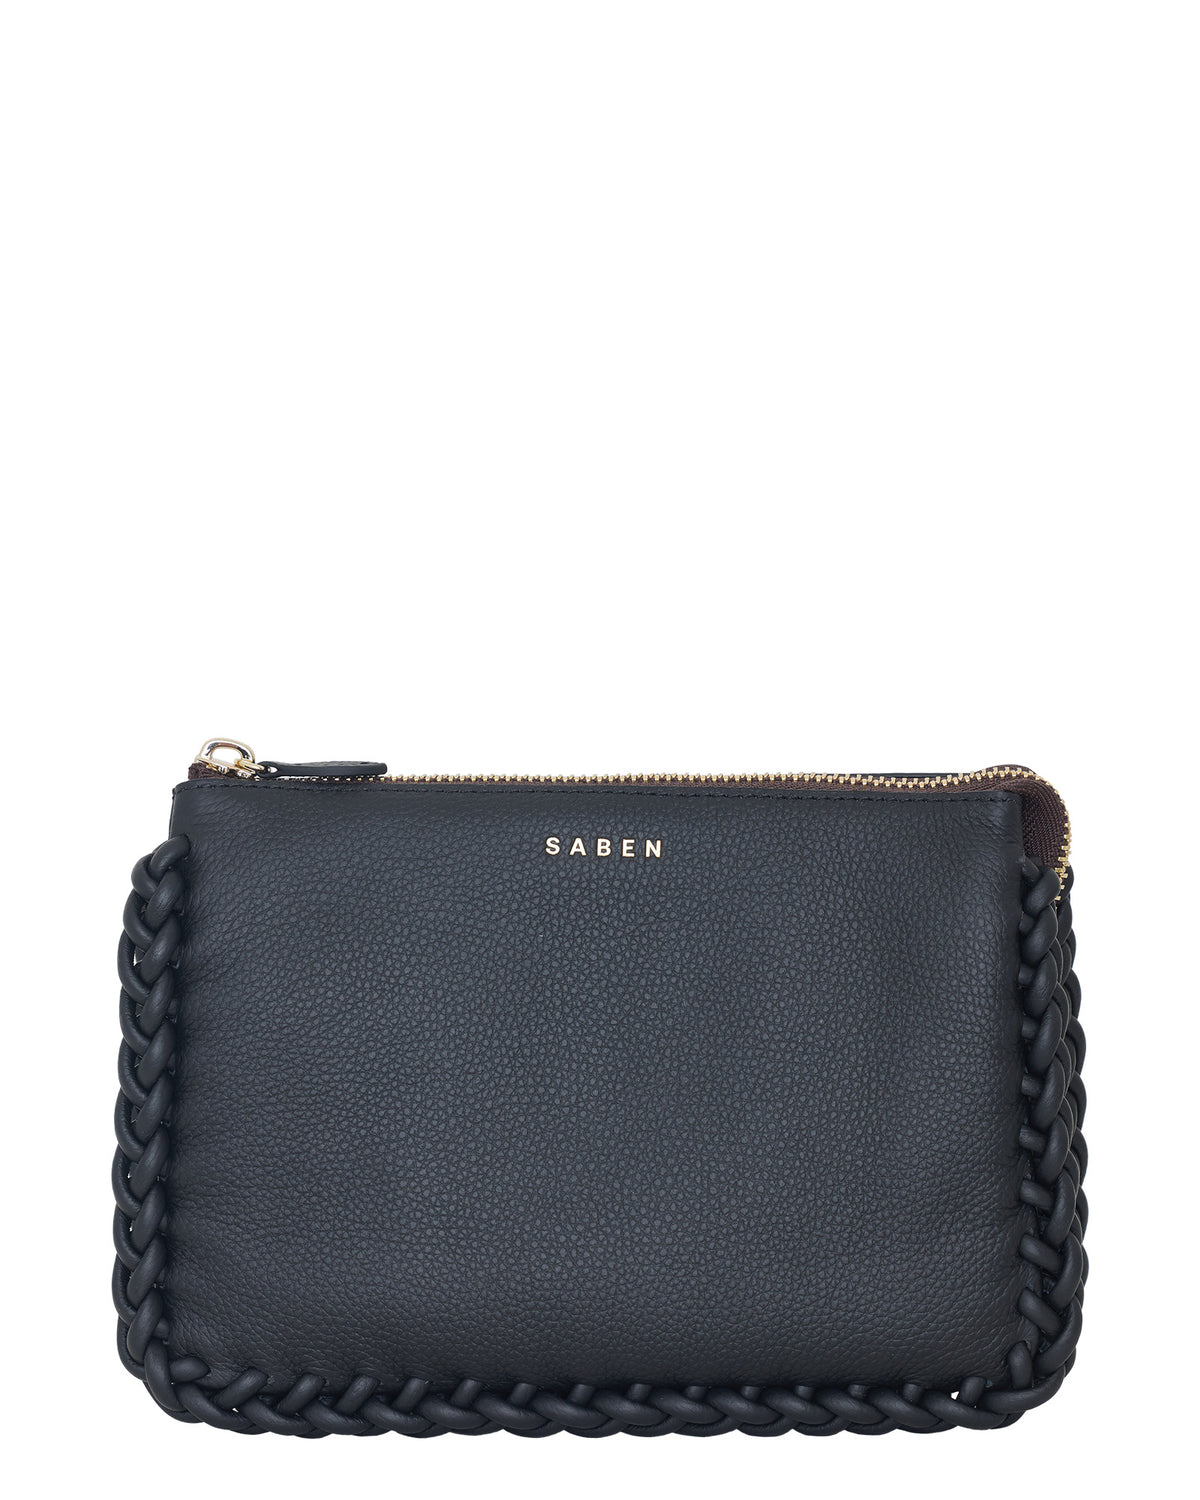 Black Handbags, Purses & Wallets for Women | Nordstrom